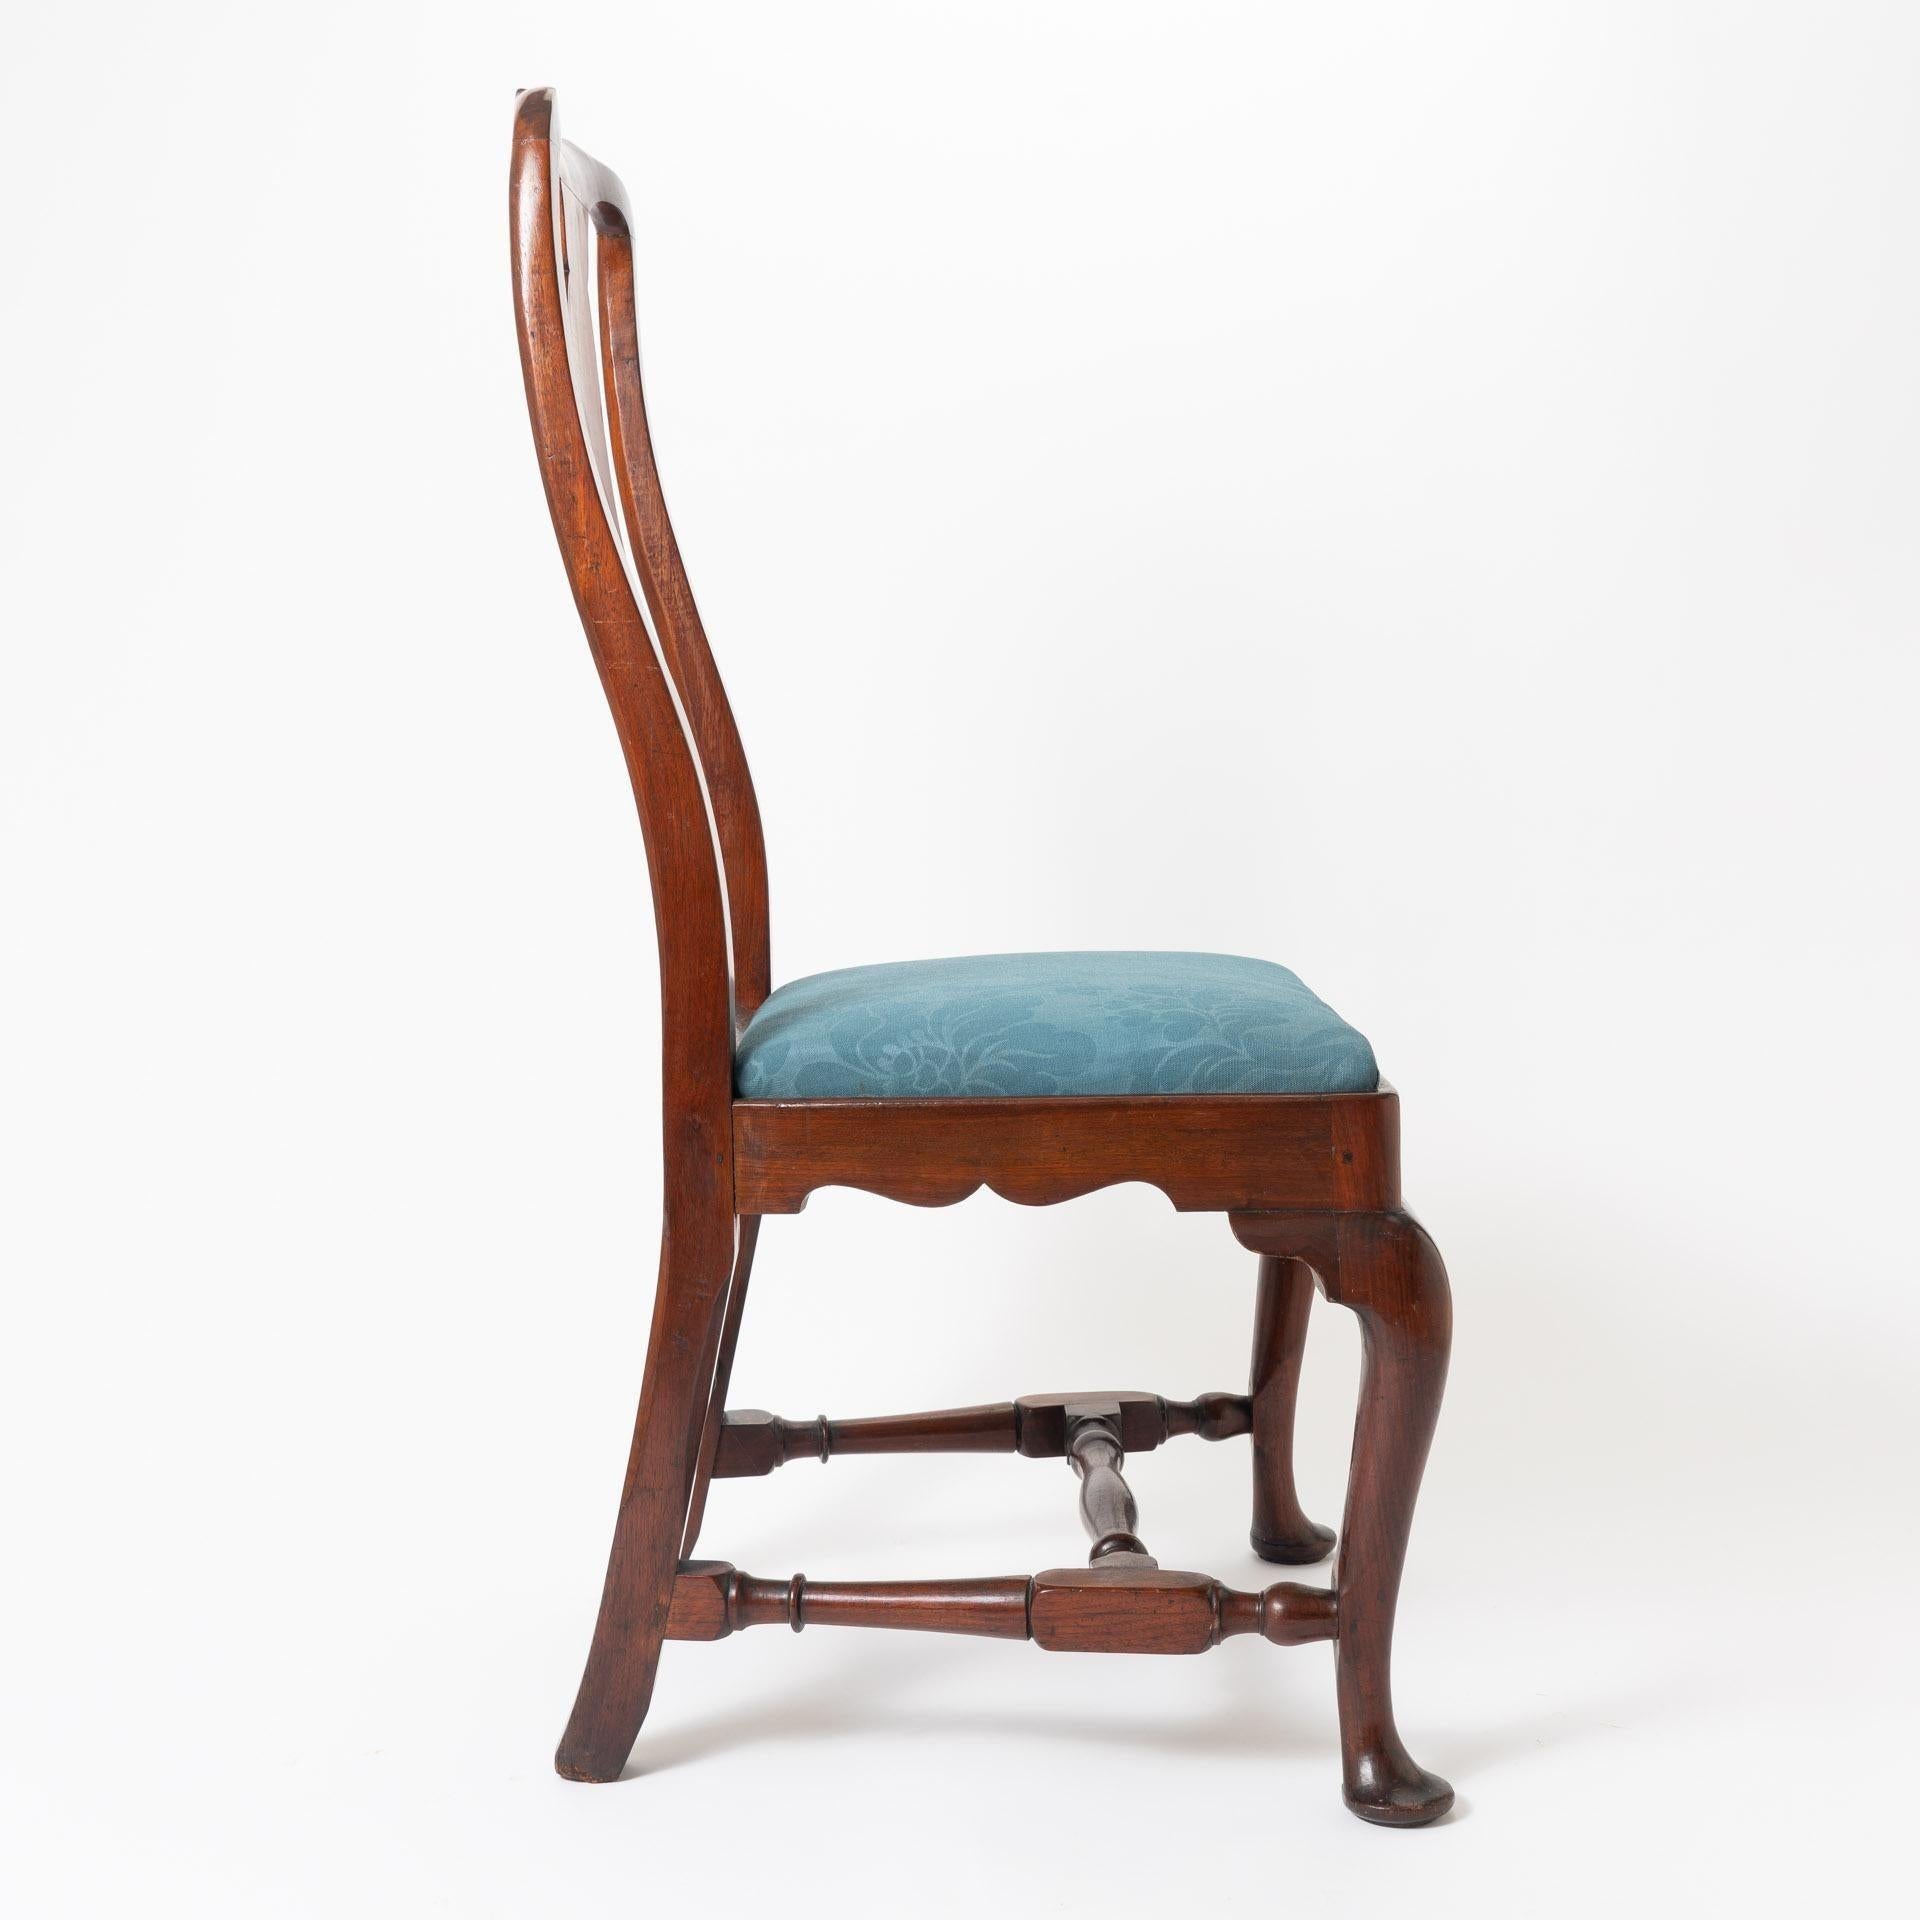 American Boston Queen Ann Mahogany Slip Seat Side Chair, 1710-20 For Sale